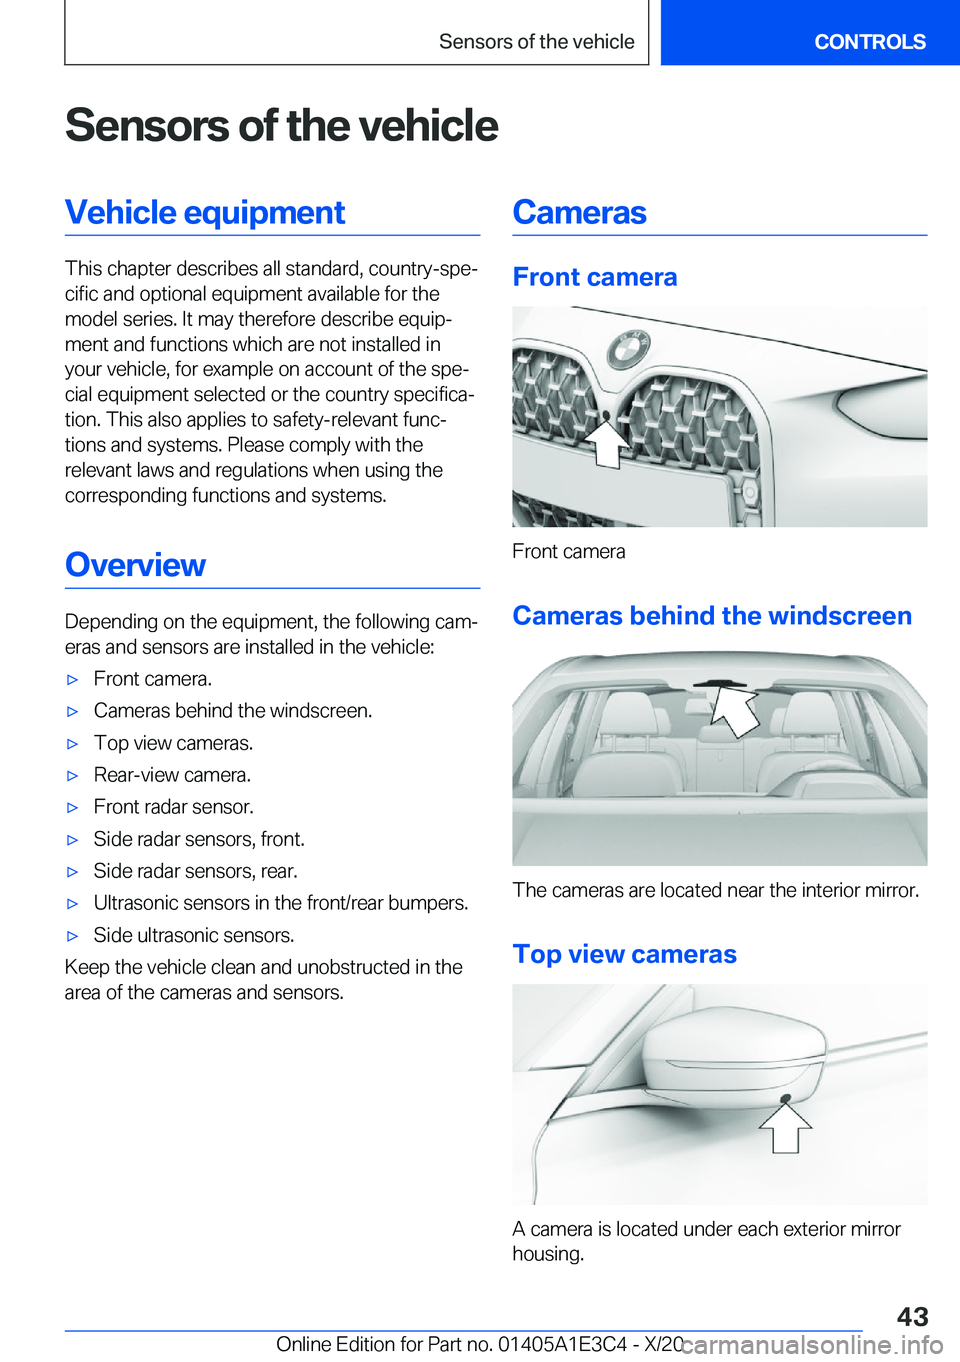 BMW M4 2021 Service Manual �S�e�n�s�o�r�s��o�f��t�h�e��v�e�h�i�c�l�e�V�e�h�i�c�l�e��e�q�u�i�p�m�e�n�t
�T�h�i�s��c�h�a�p�t�e�r��d�e�s�c�r�i�b�e�s��a�l�l��s�t�a�n�d�a�r�d�,��c�o�u�n�t�r�y�-�s�p�ej�c�i�f�i�c��a�n�d��o�